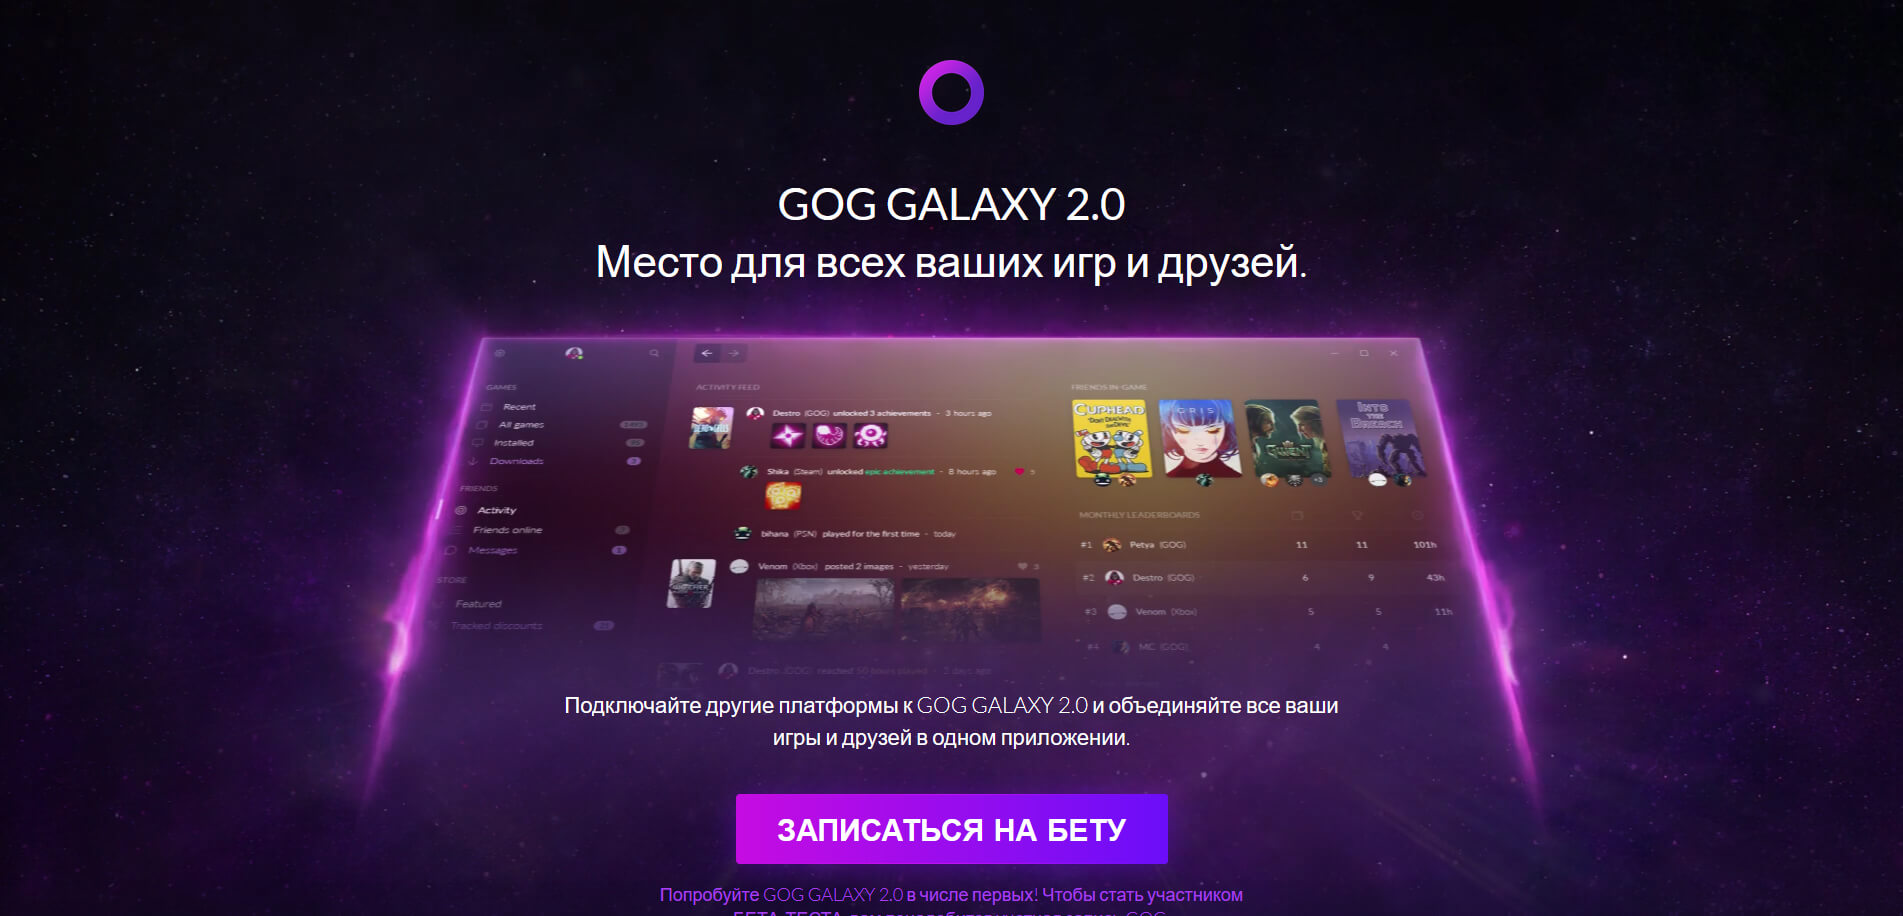 В GOG Galaxy 2.0 началась закрытая бета (ЗБТ) (фото)